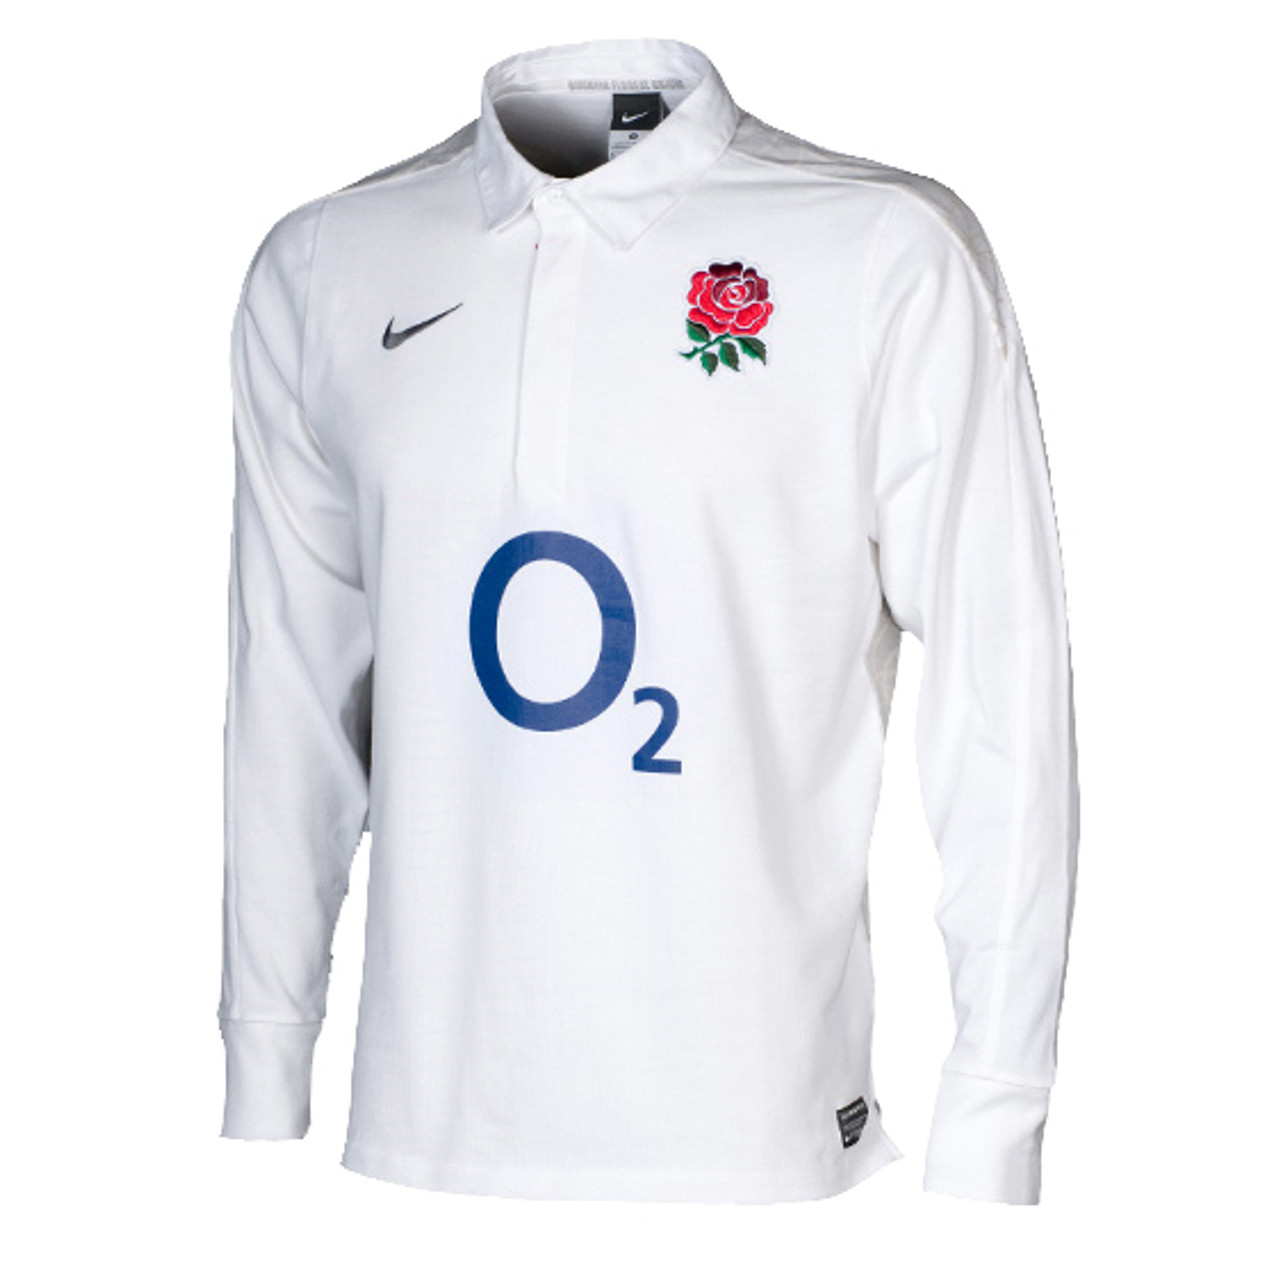 replica england rugby shirts